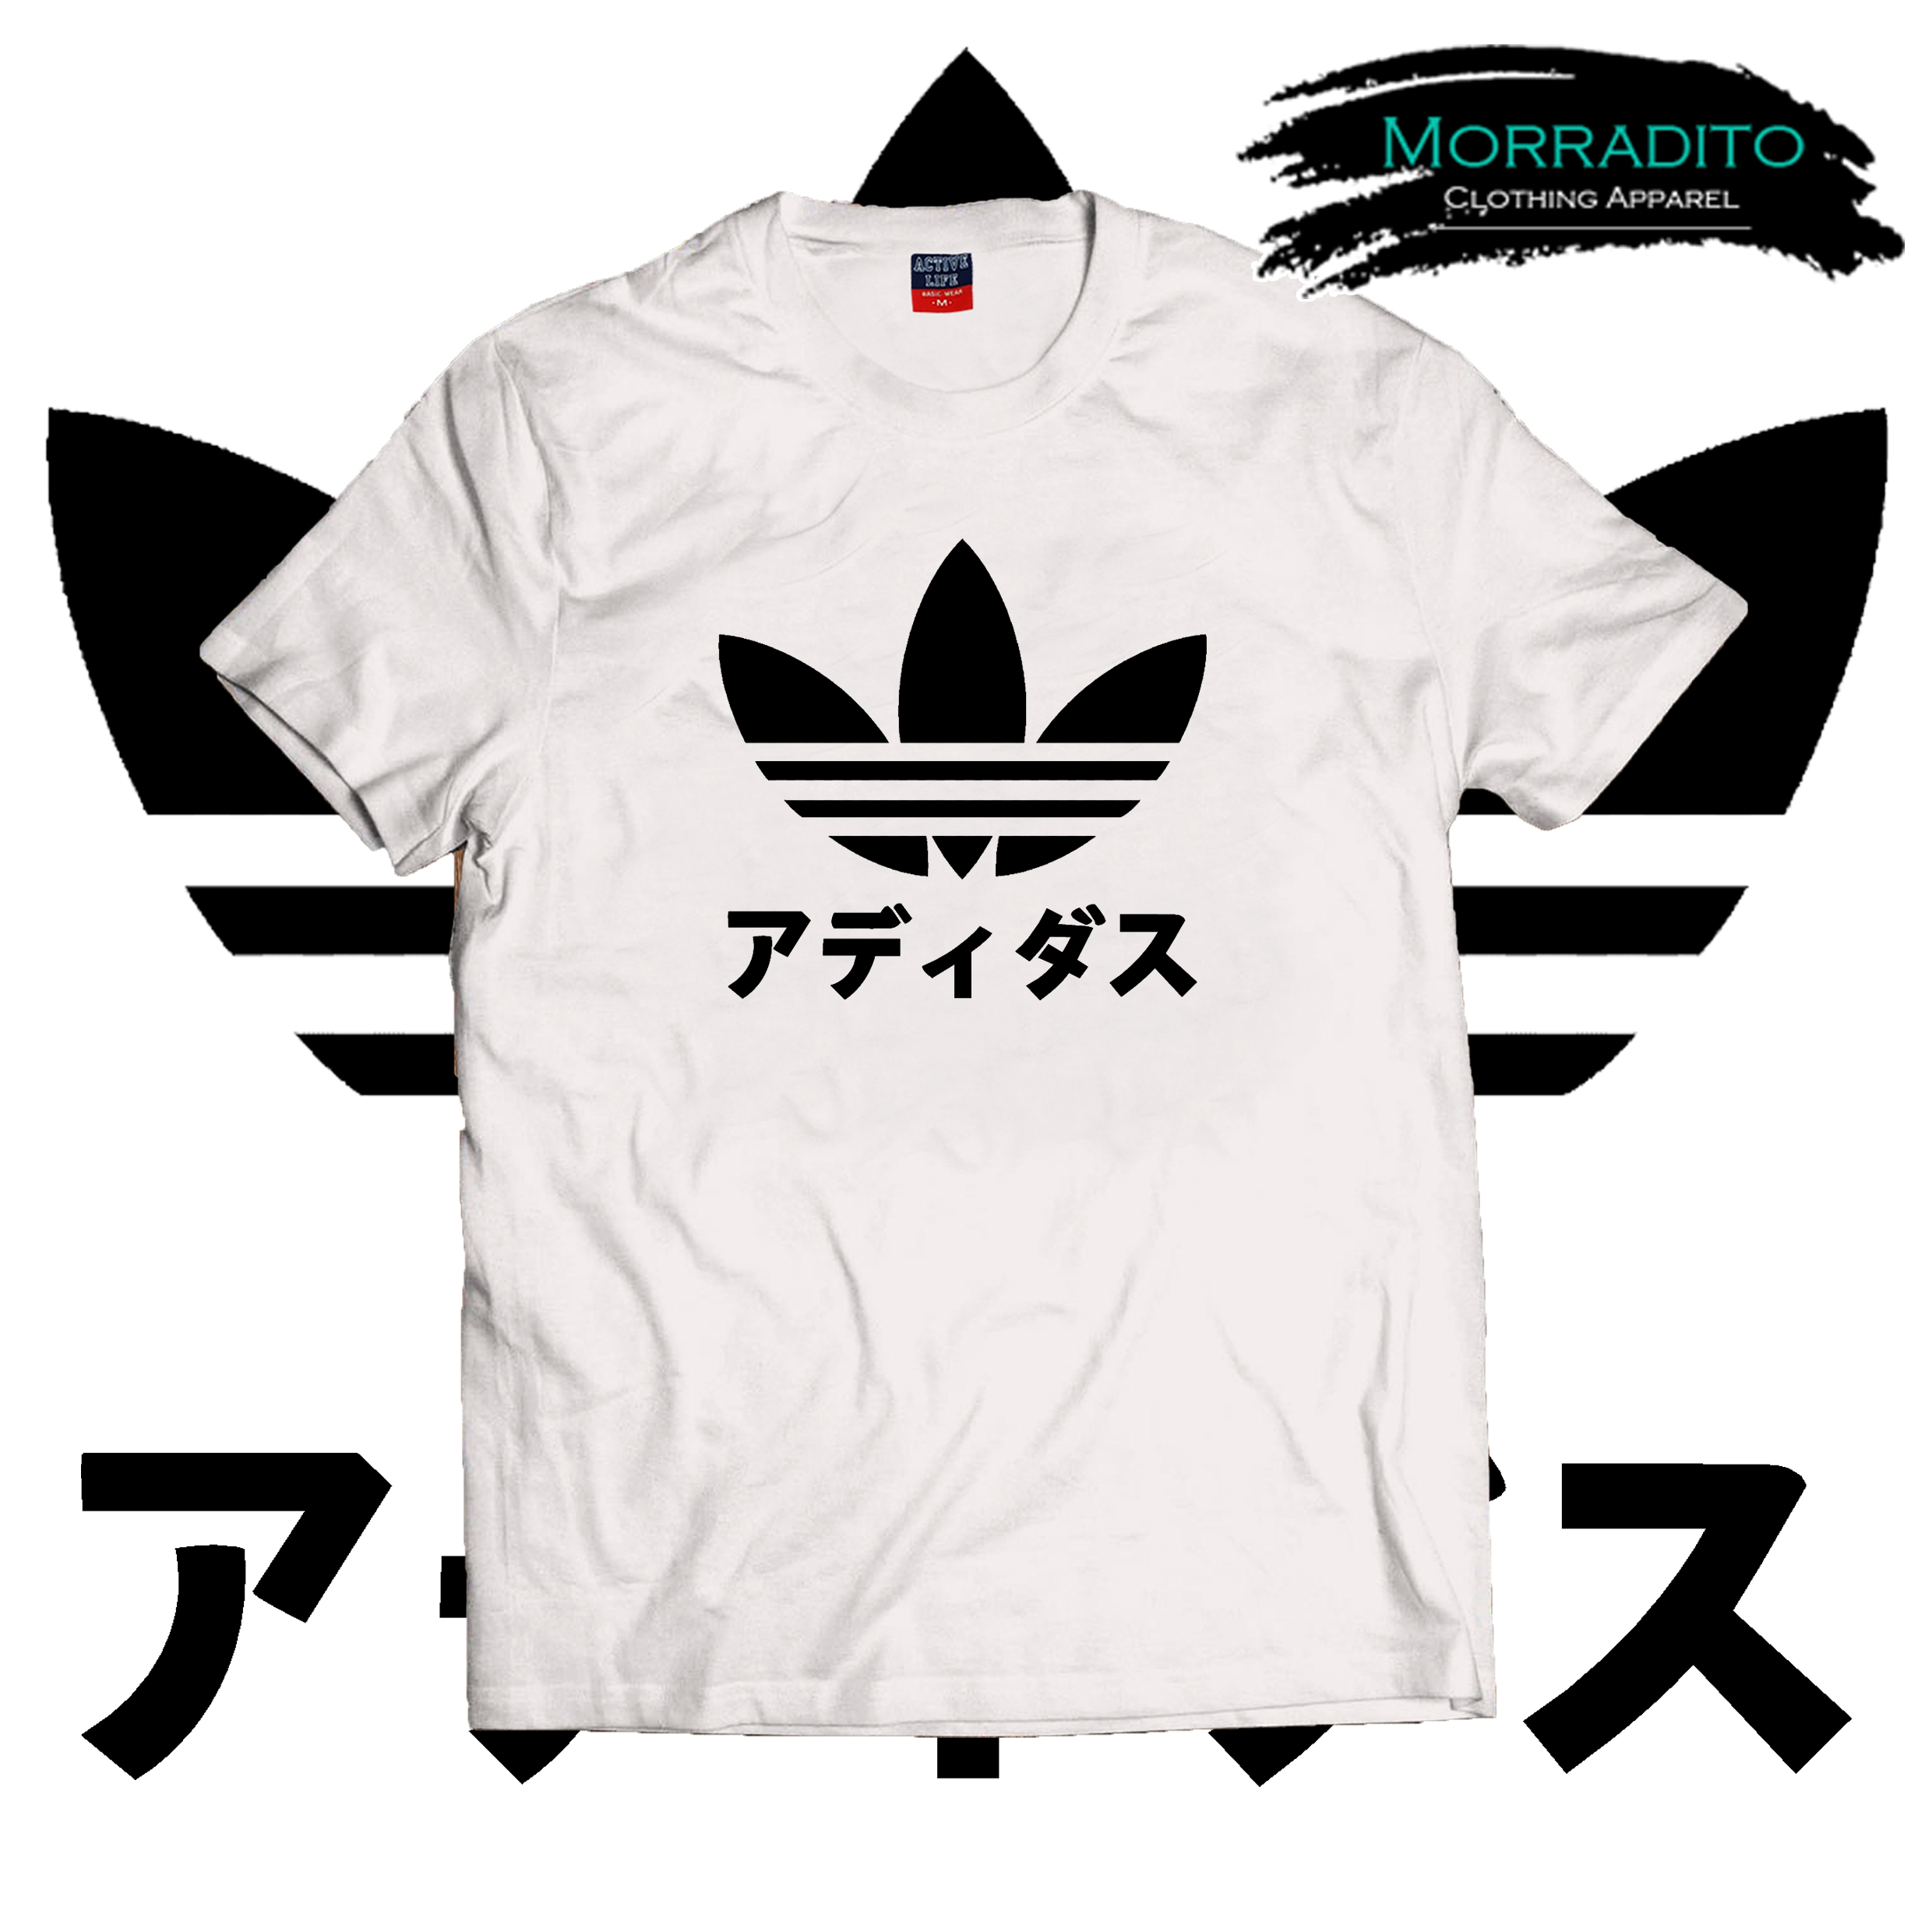 adidas japanese shirt